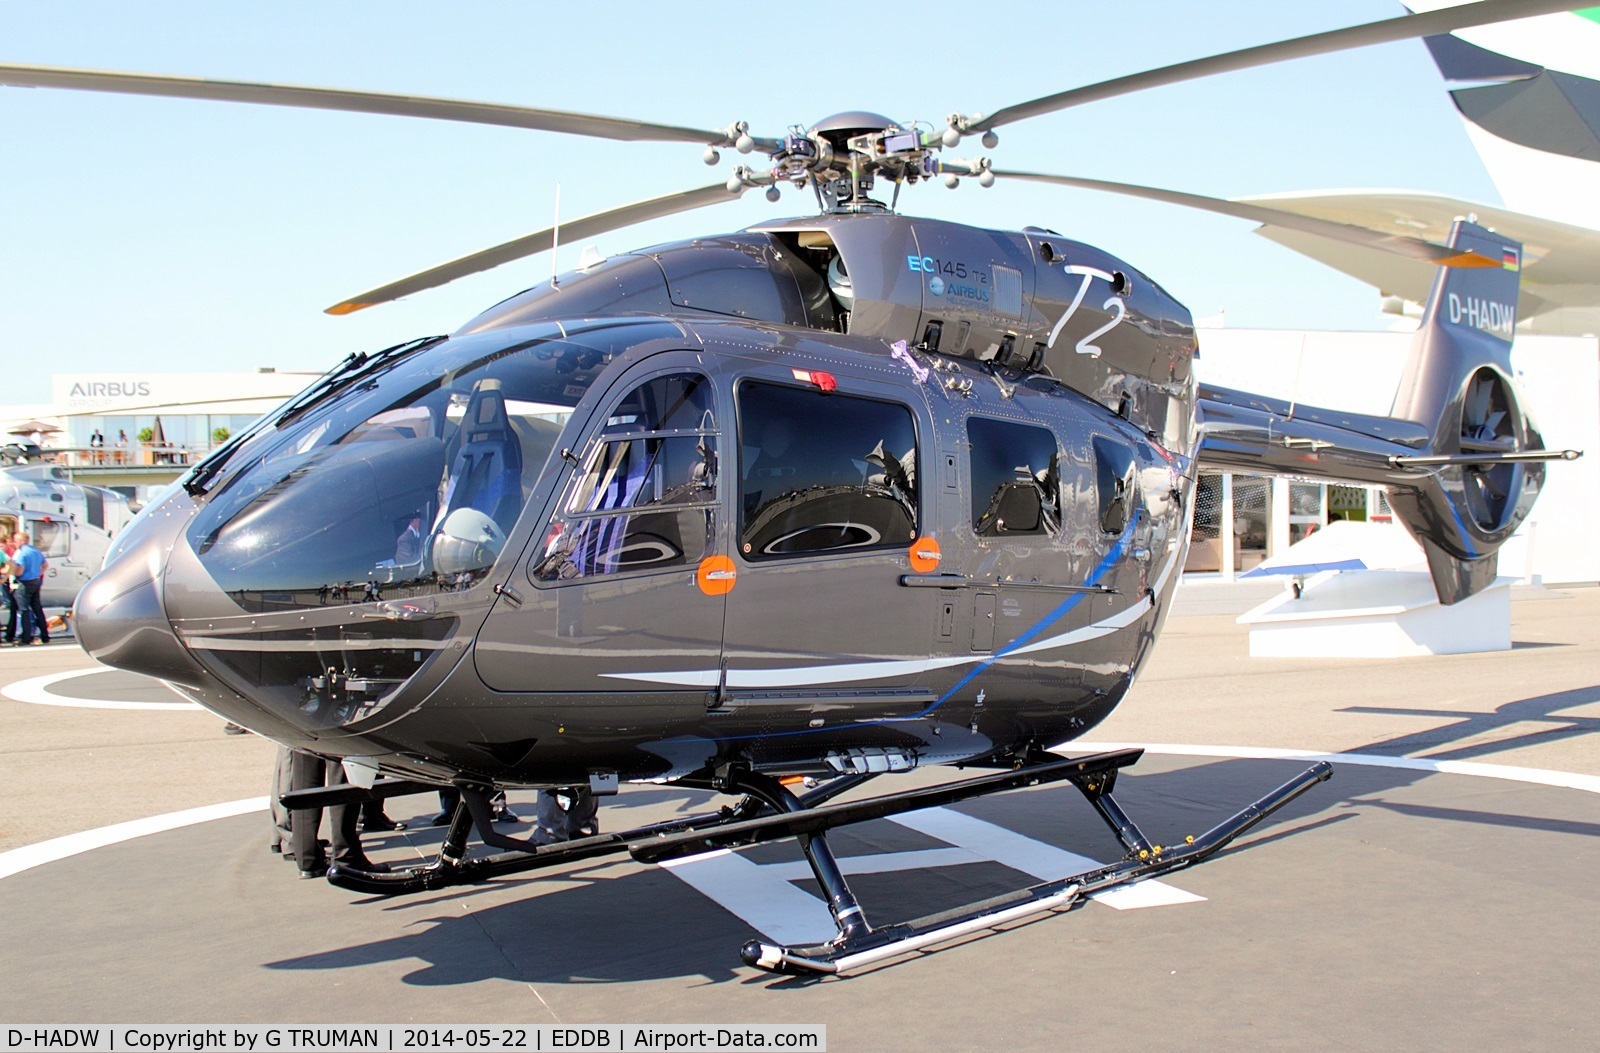 D-HADW, 2010 Eurocopter-Kawasaki EC-145T-2 (BK-117D-2) C/N 20002, A very polished EC145T2 in the static display at ILA 2014